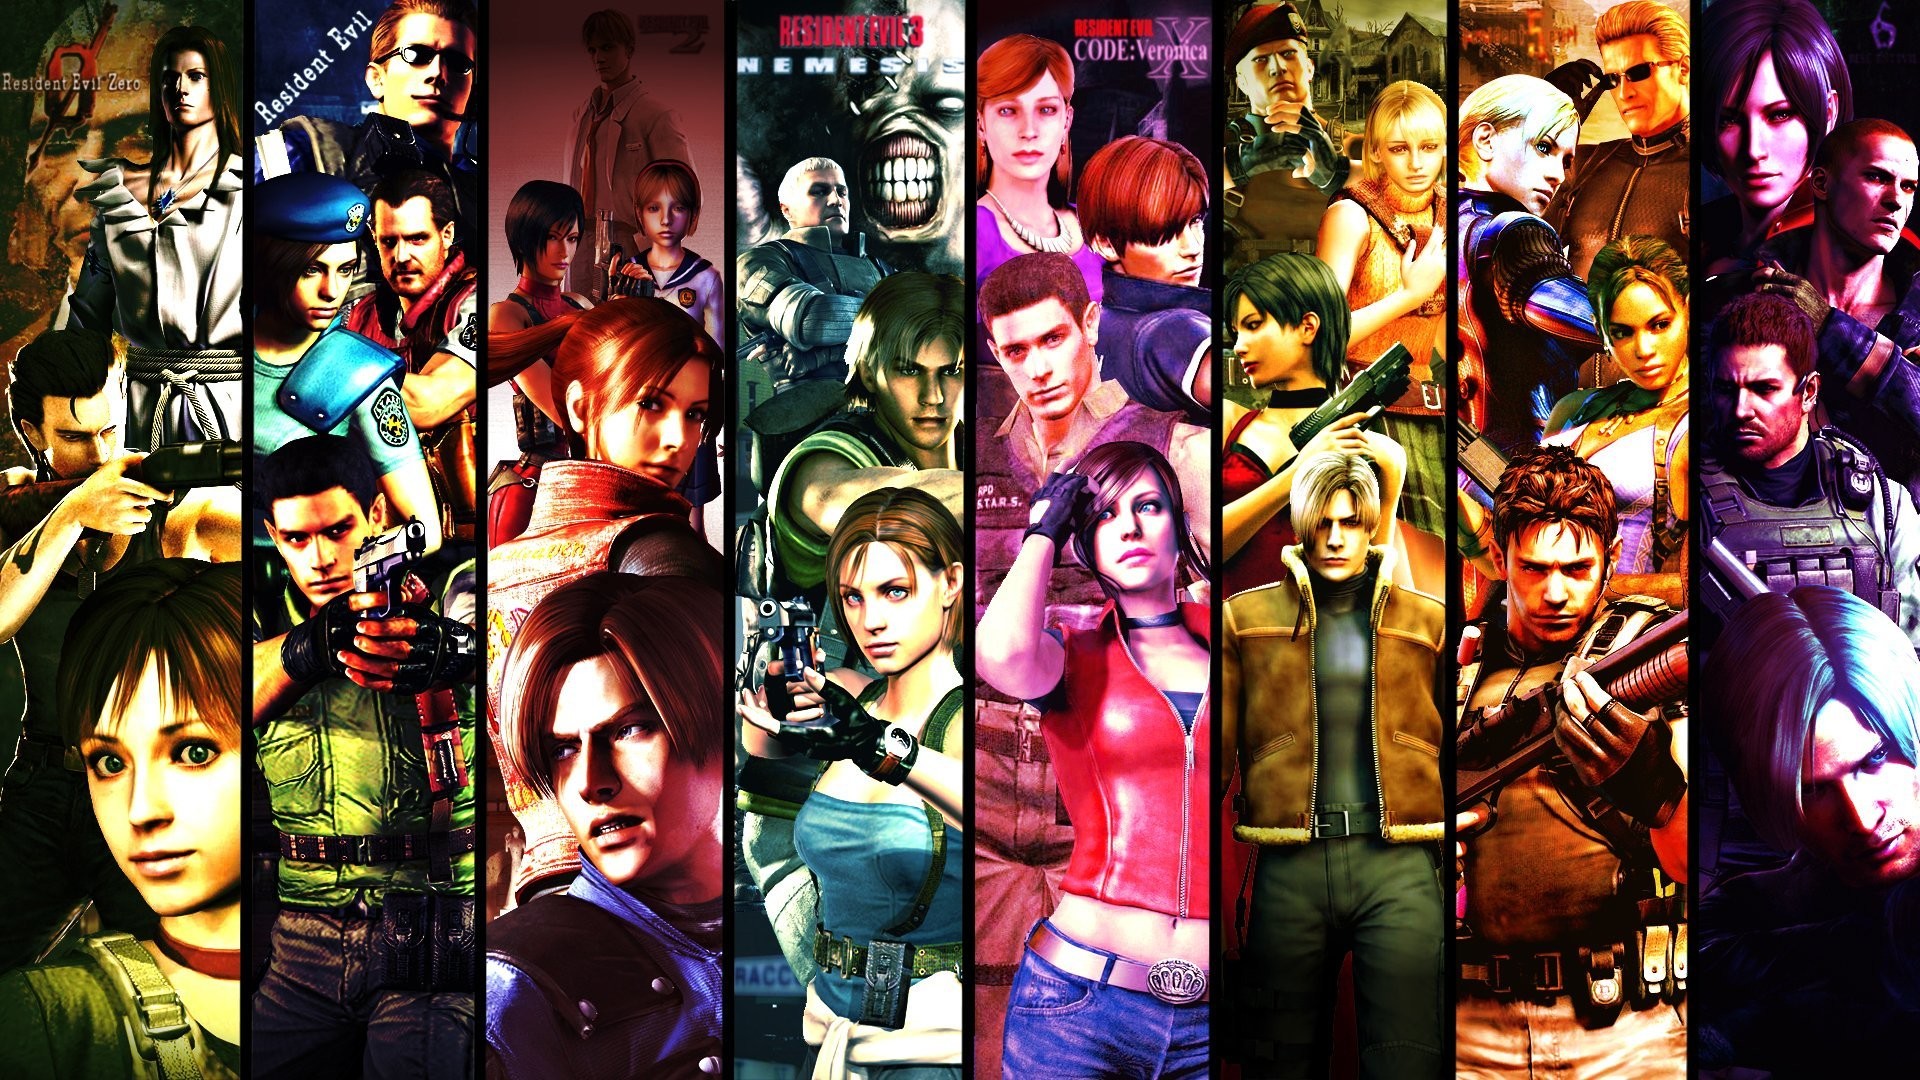 All games com. Resident Evil. Резидент ивел 6. Персонажи ресидентэвил. Резидент эвил персонажи.